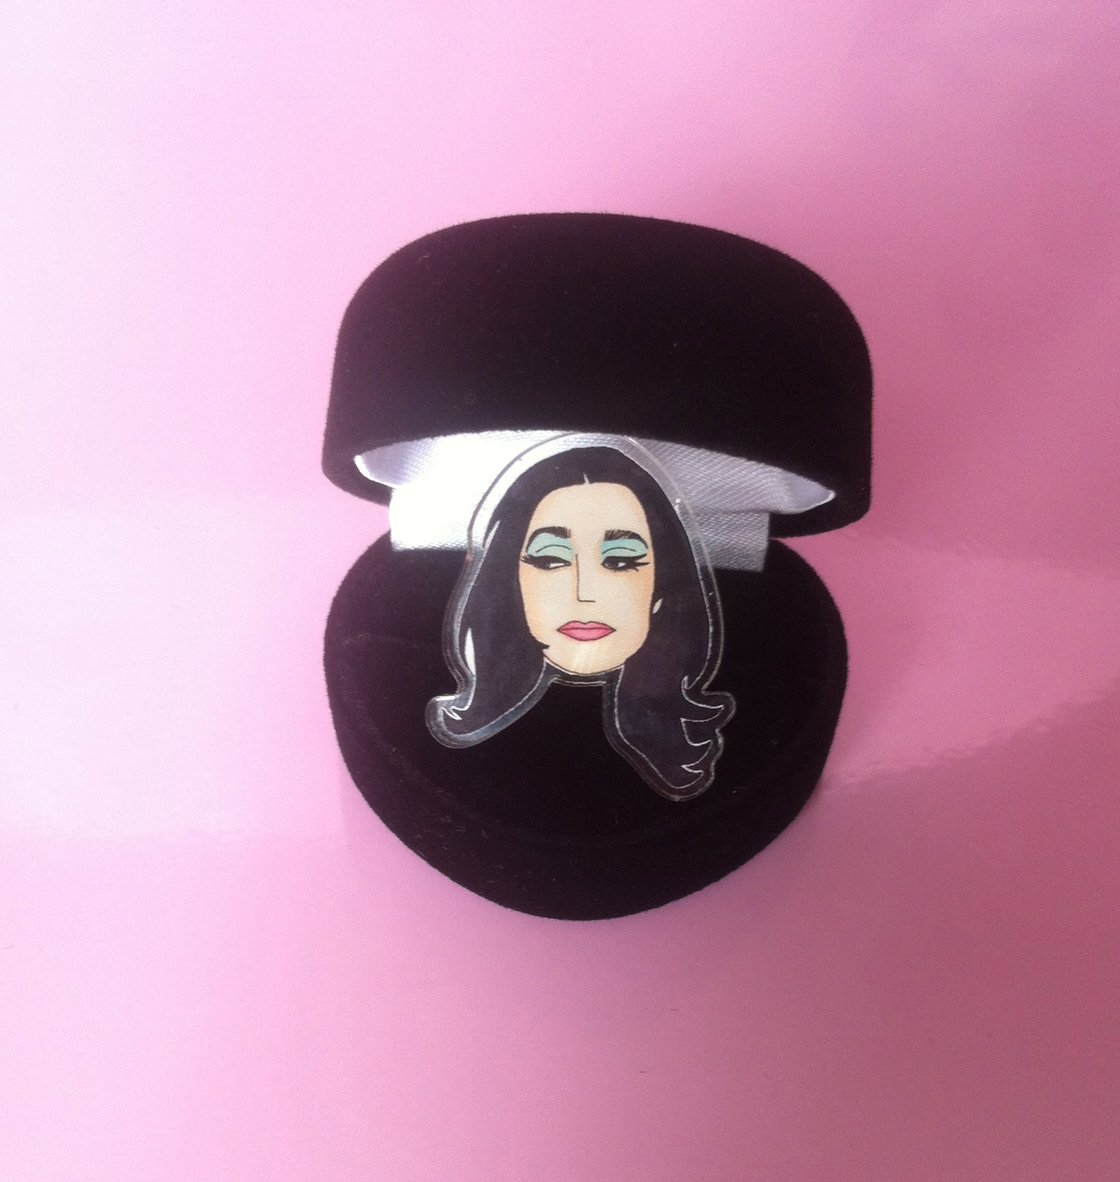 Image of Pj Harvey acrylic plastic adjustable ring sold in black heart shaped box. 